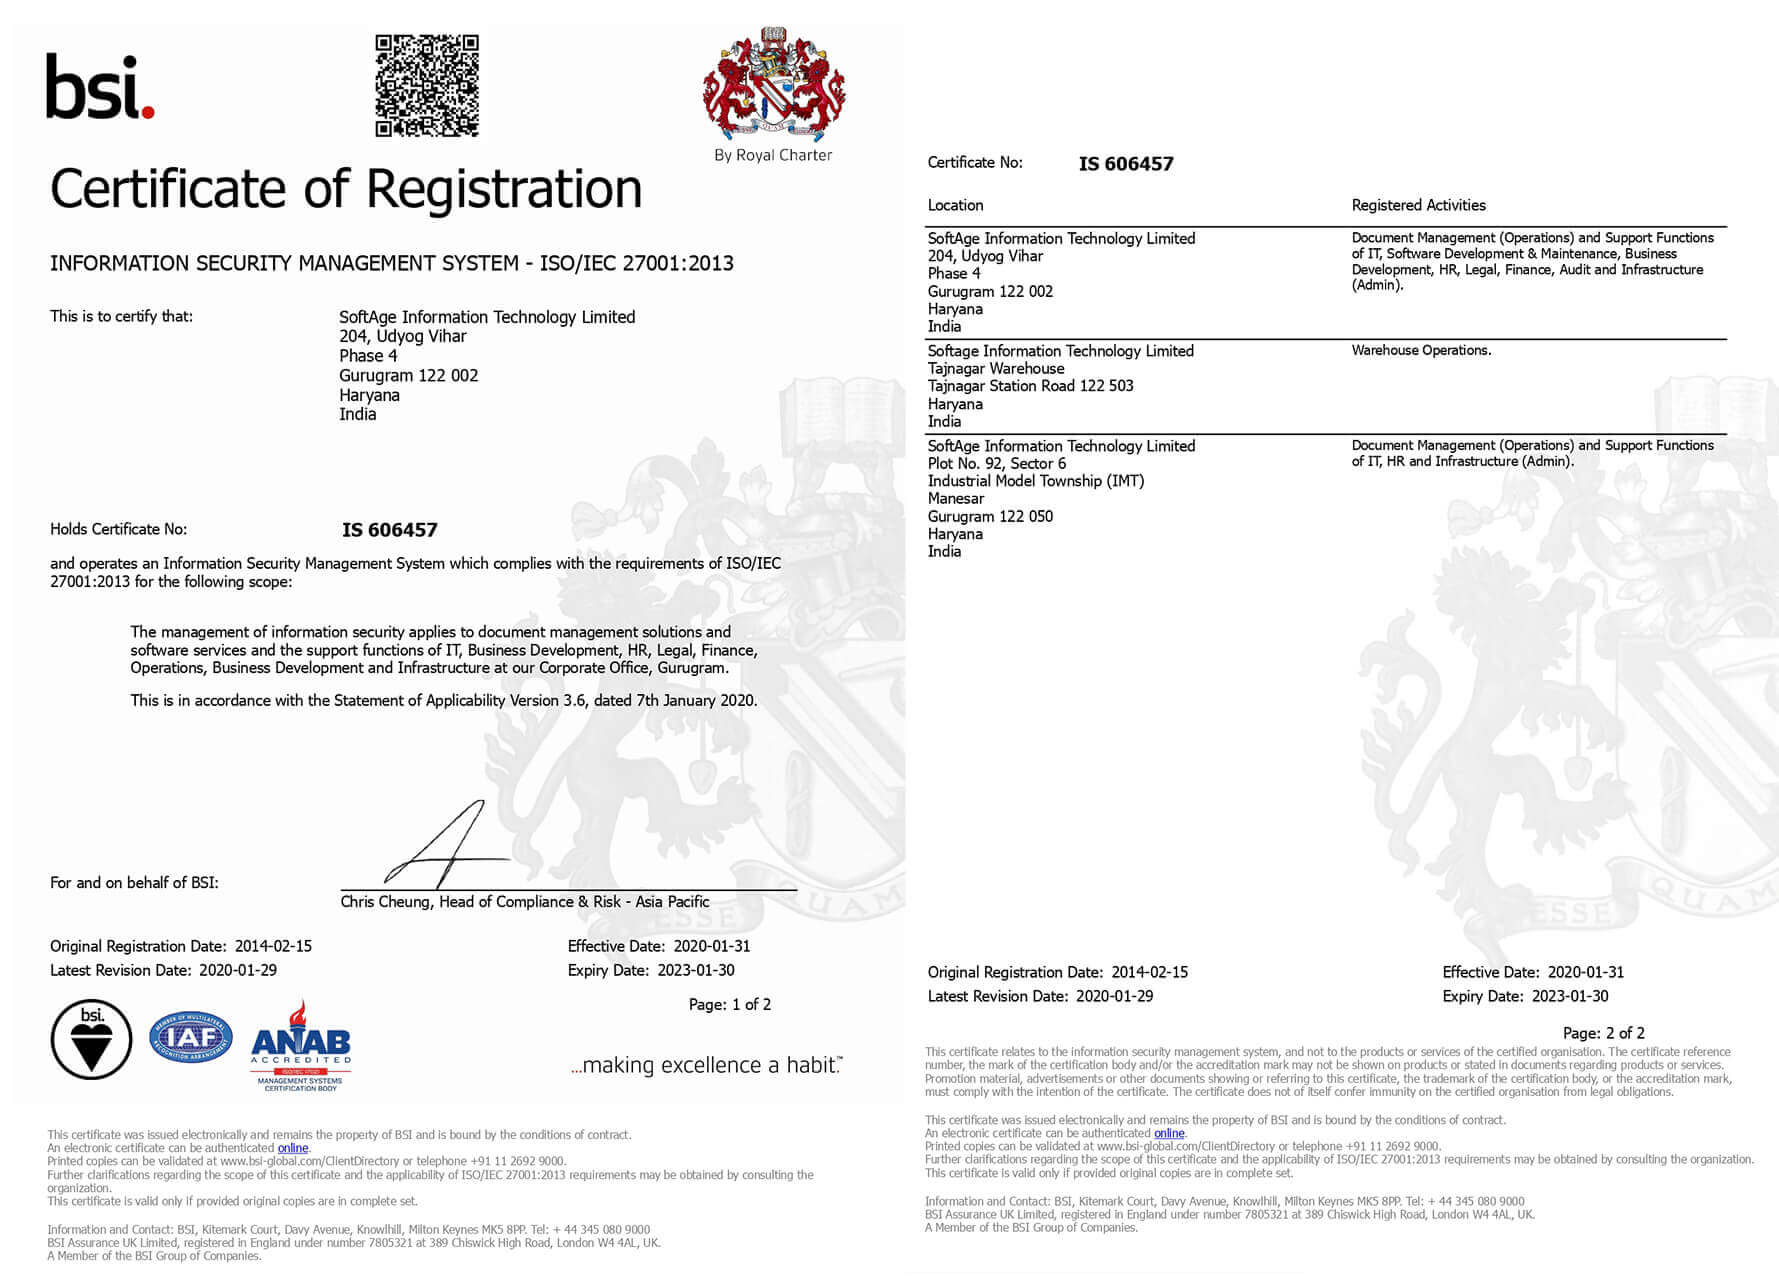 ISO/IEC 27001:2013 certified